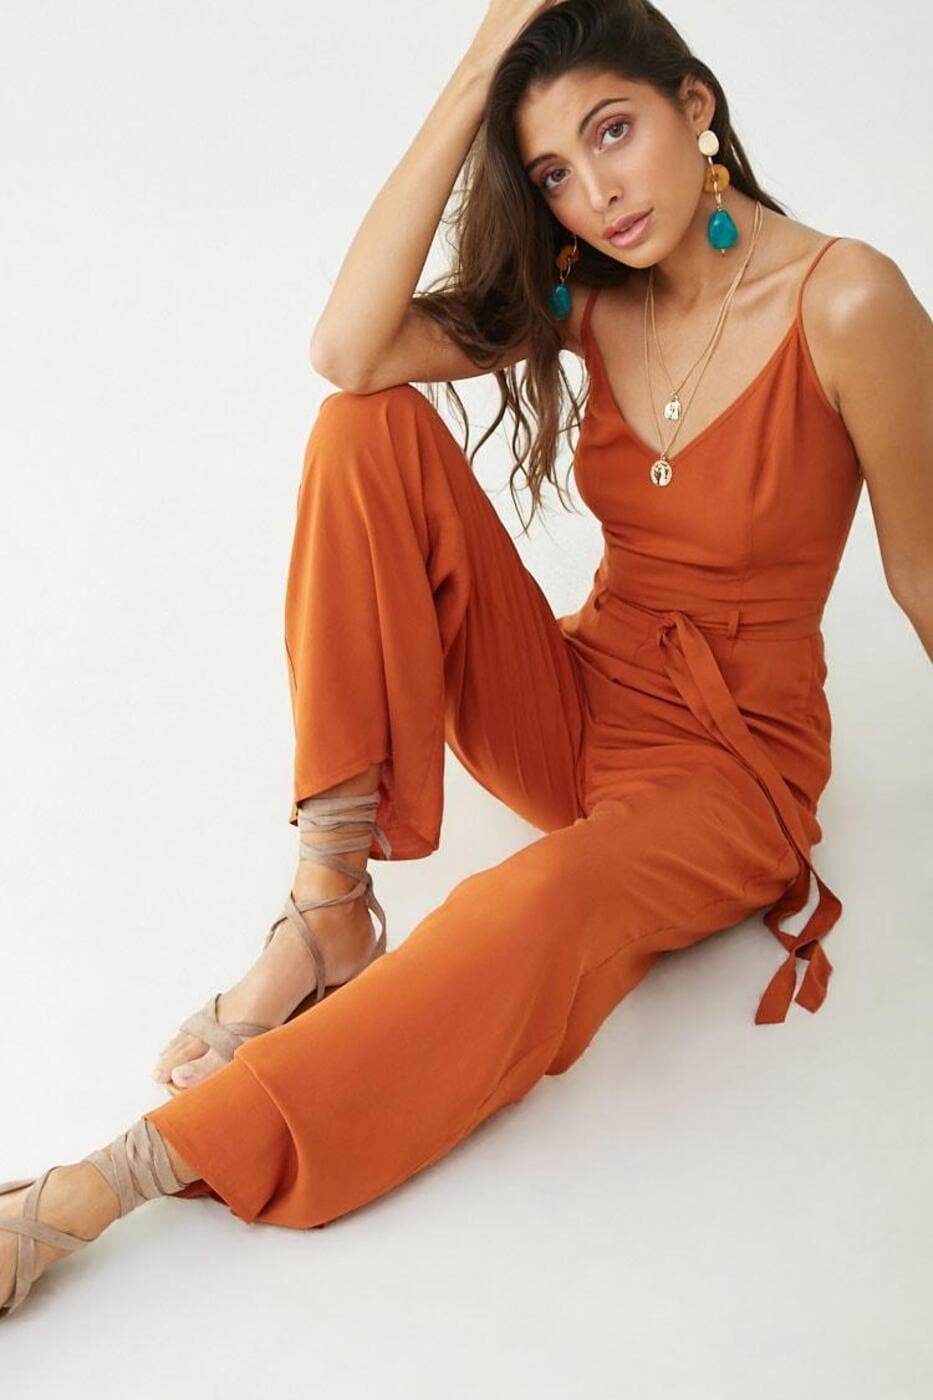 Forever 21 Rust Burnt Orange Jumpsuit Shorts Size Small For Women | eBay